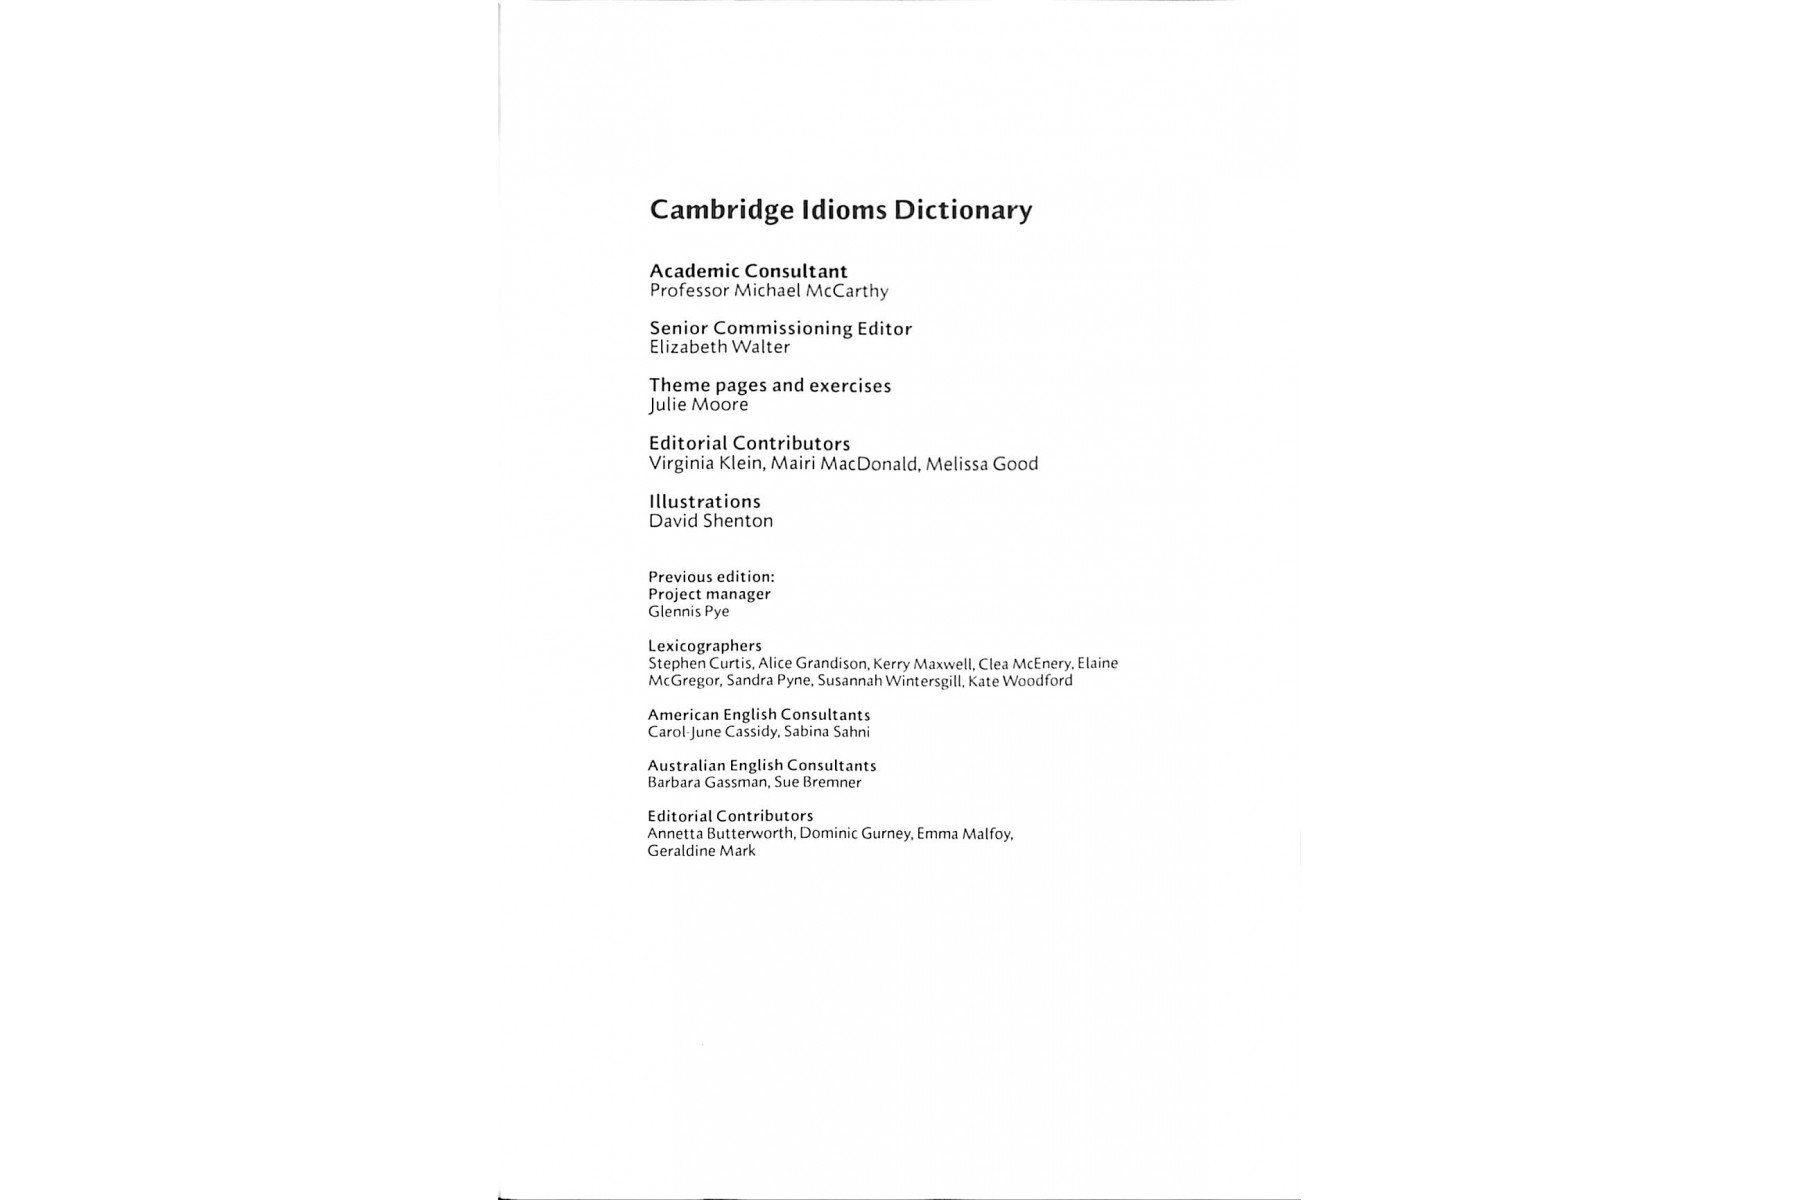 Cambridge Idioms Dictionary Second edition